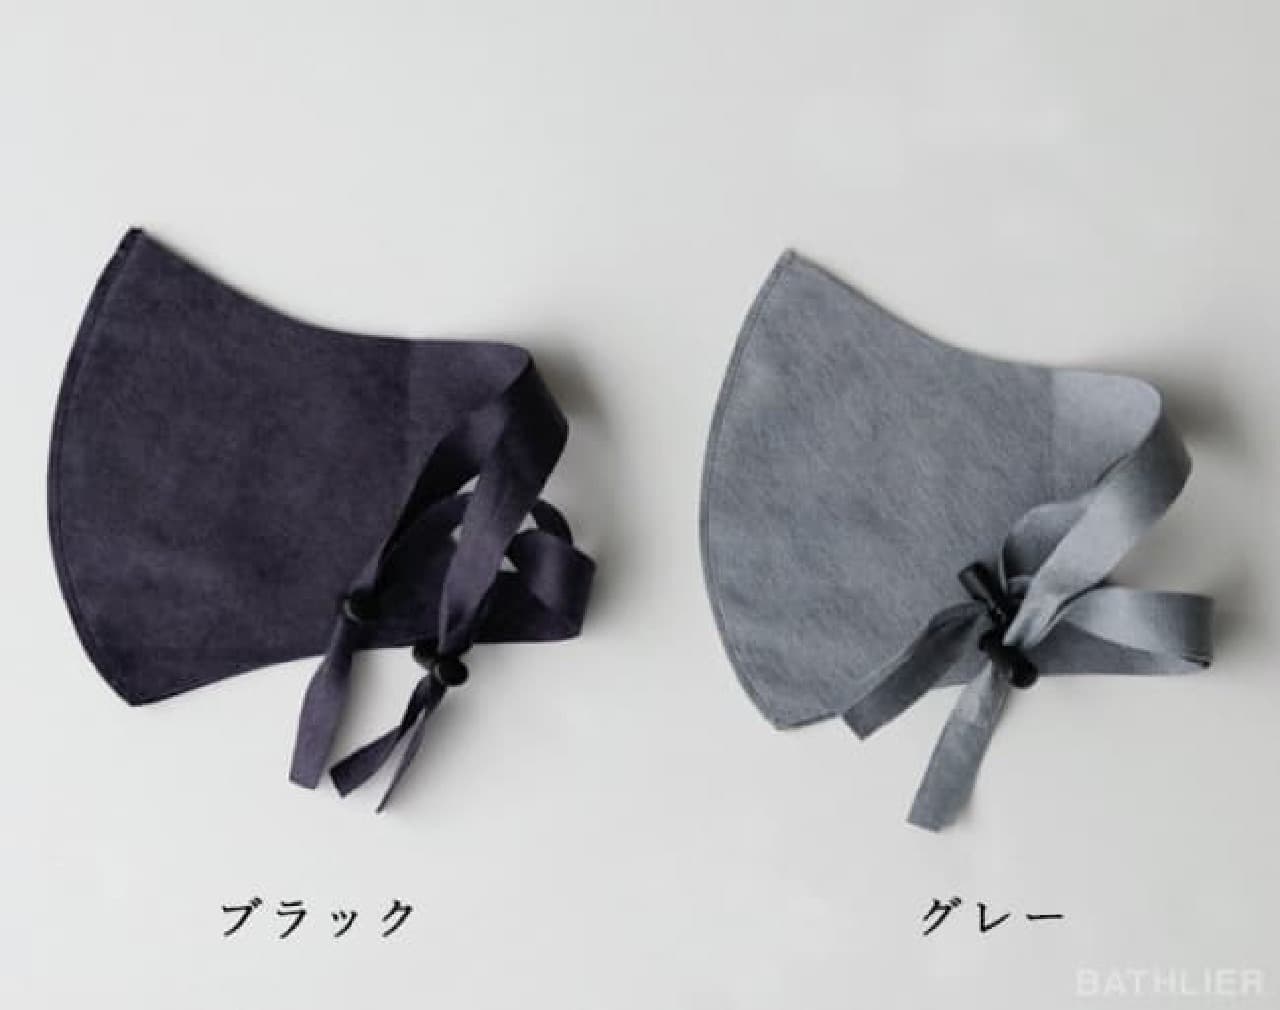 A bath-washable mask made by Furoya-san